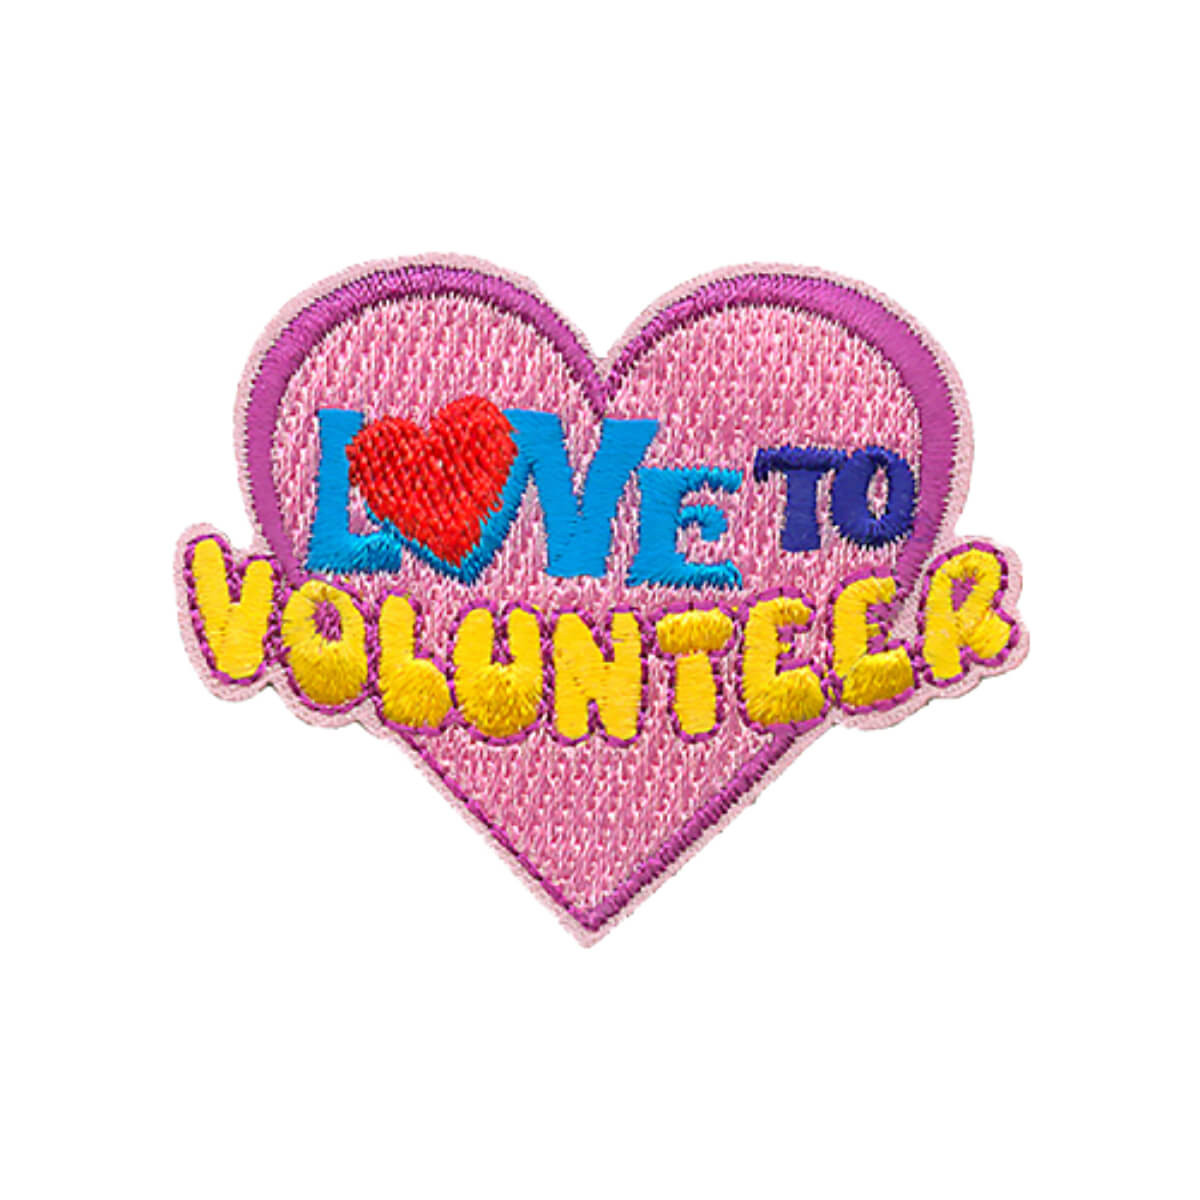 Love to Volunteer - W